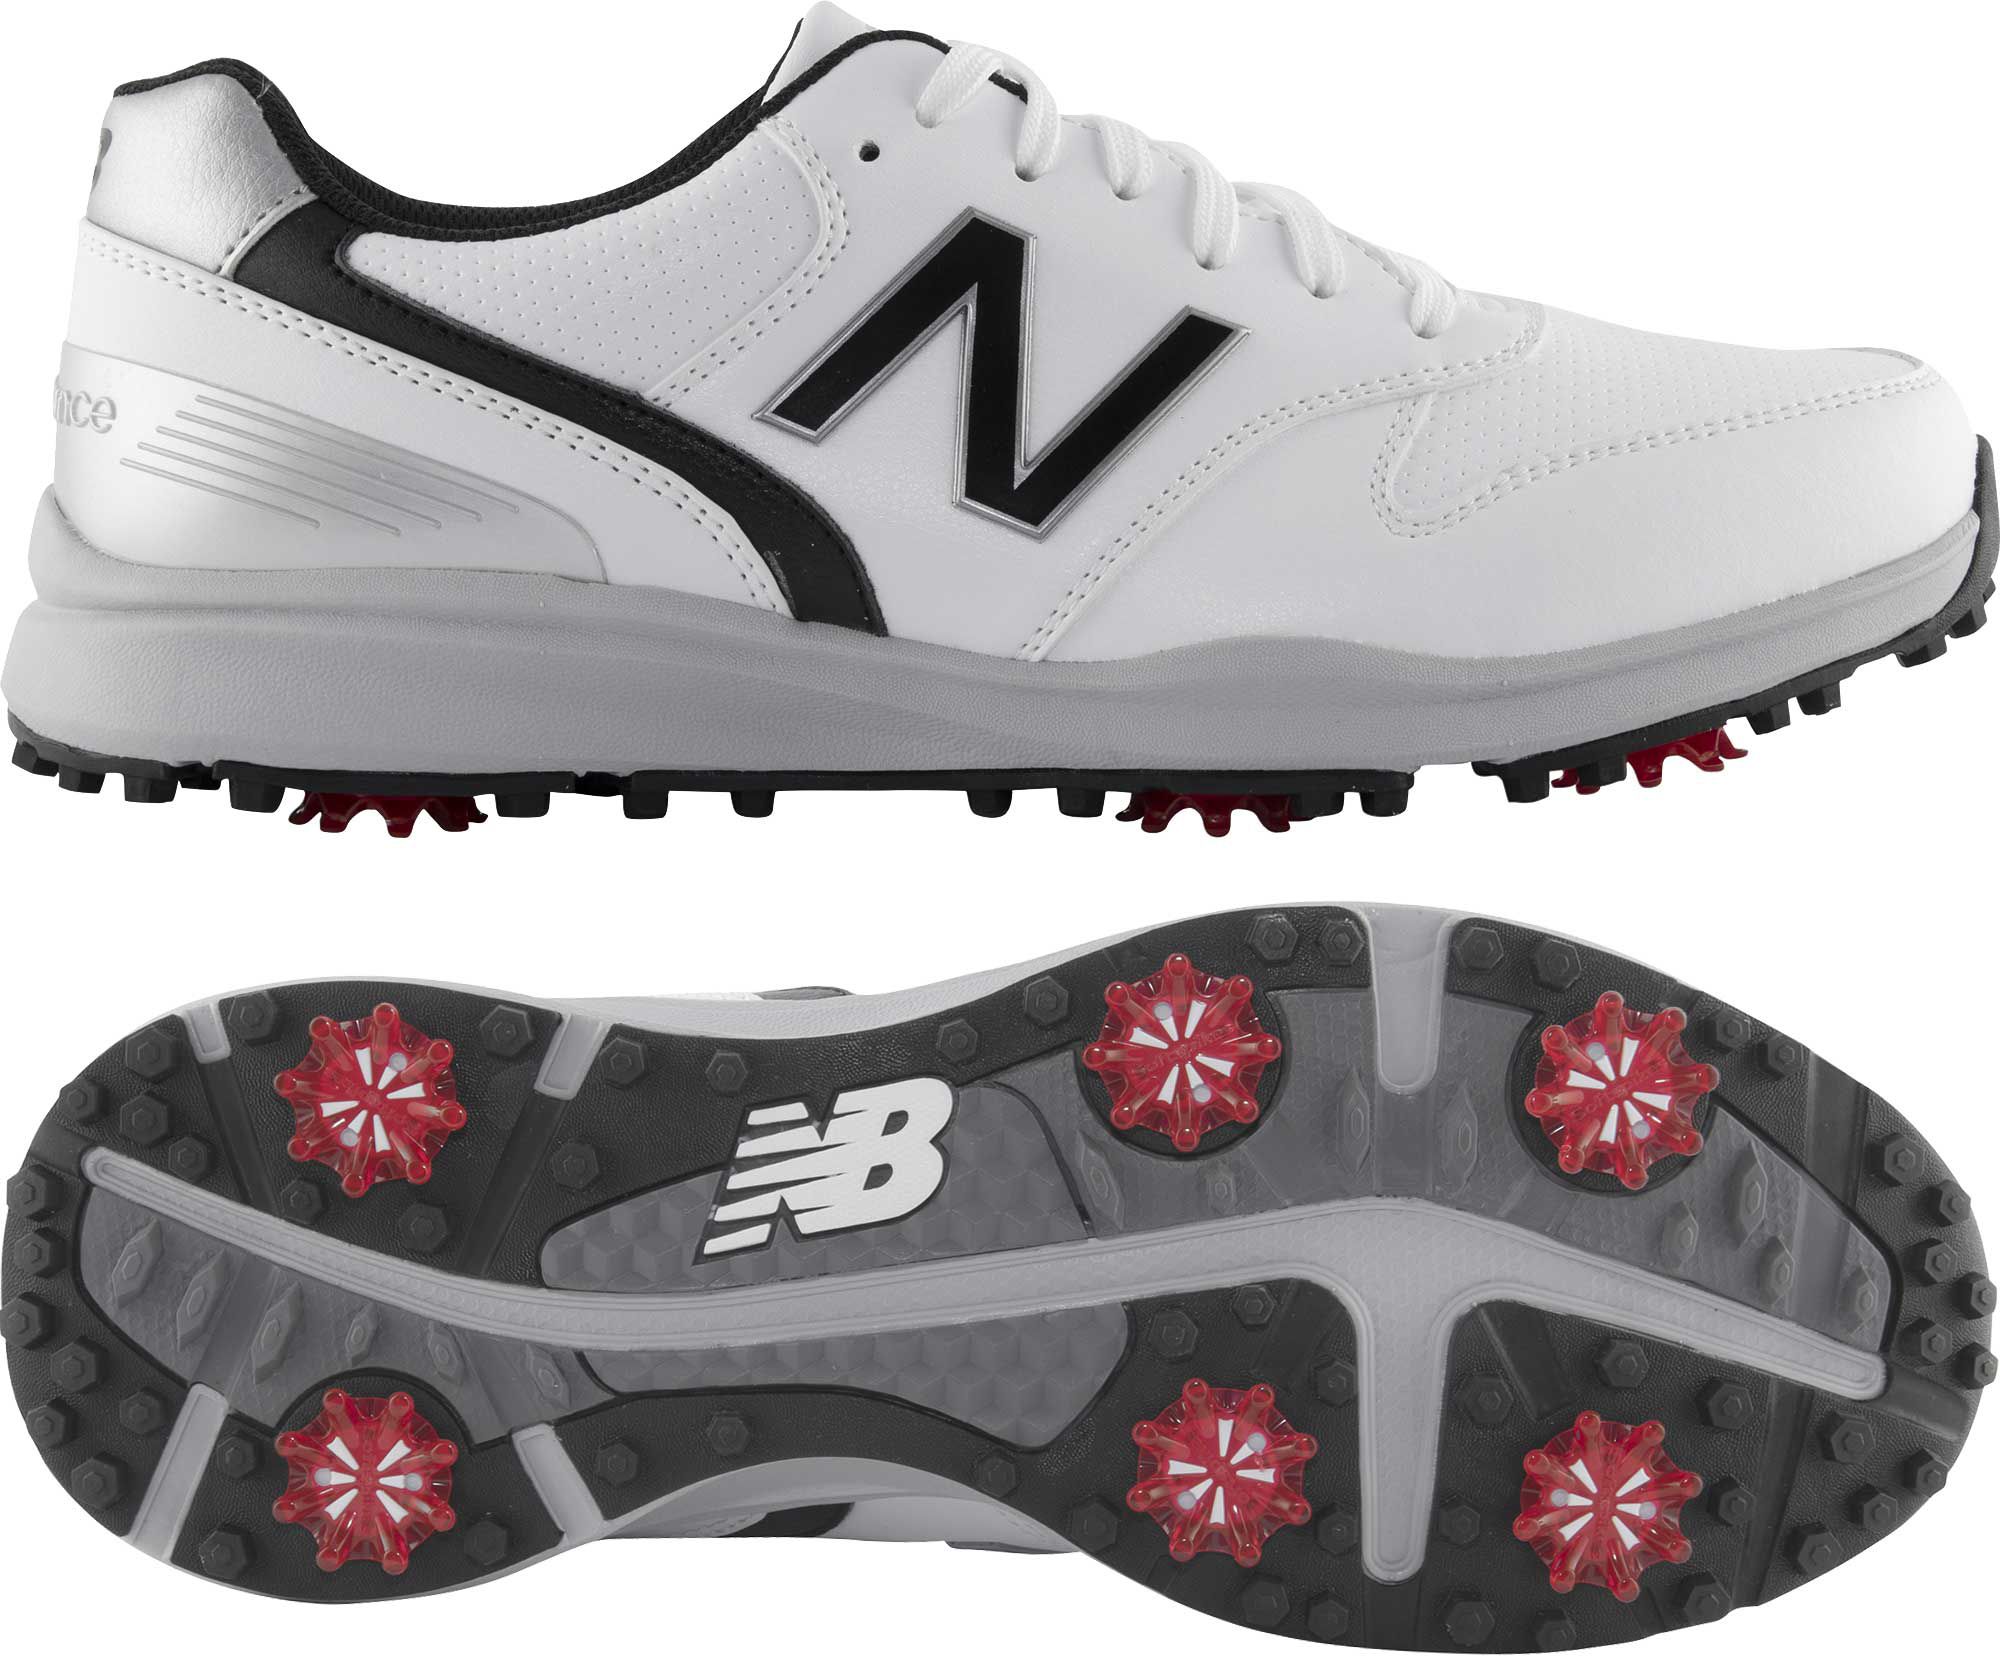 buy new balance golf shoes